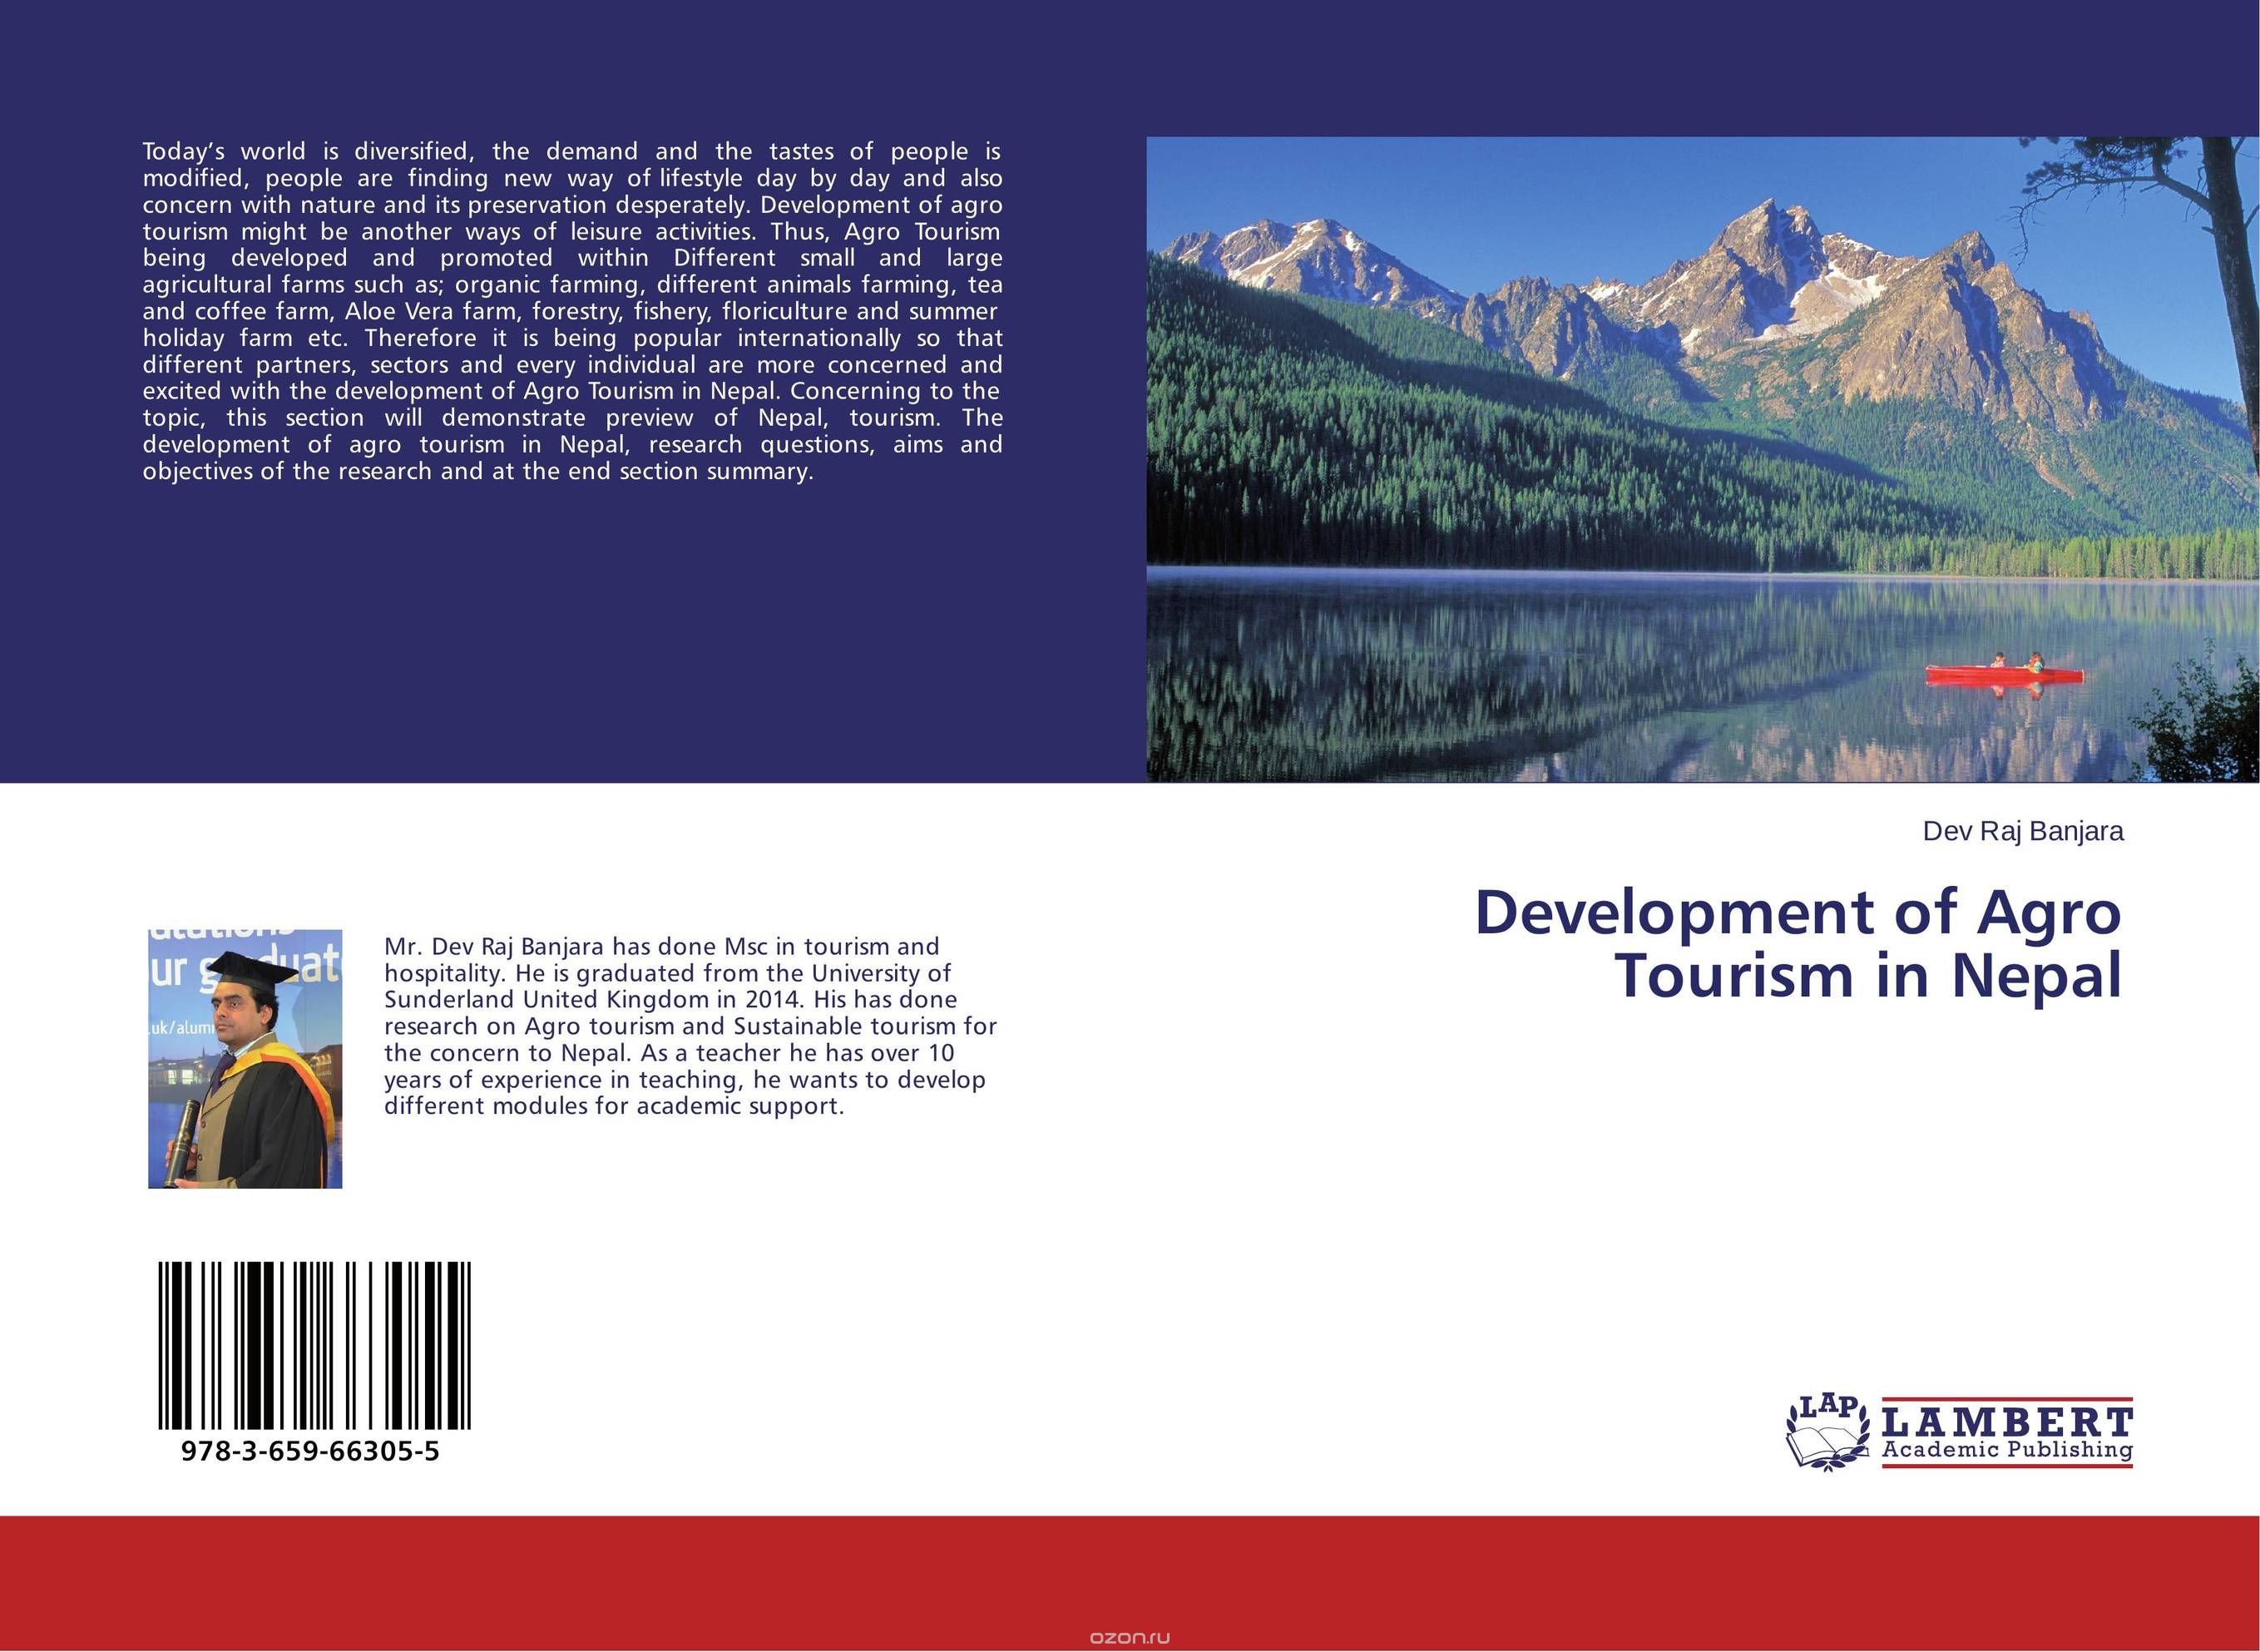 Скачать книгу "Development of Agro Tourism in Nepal"